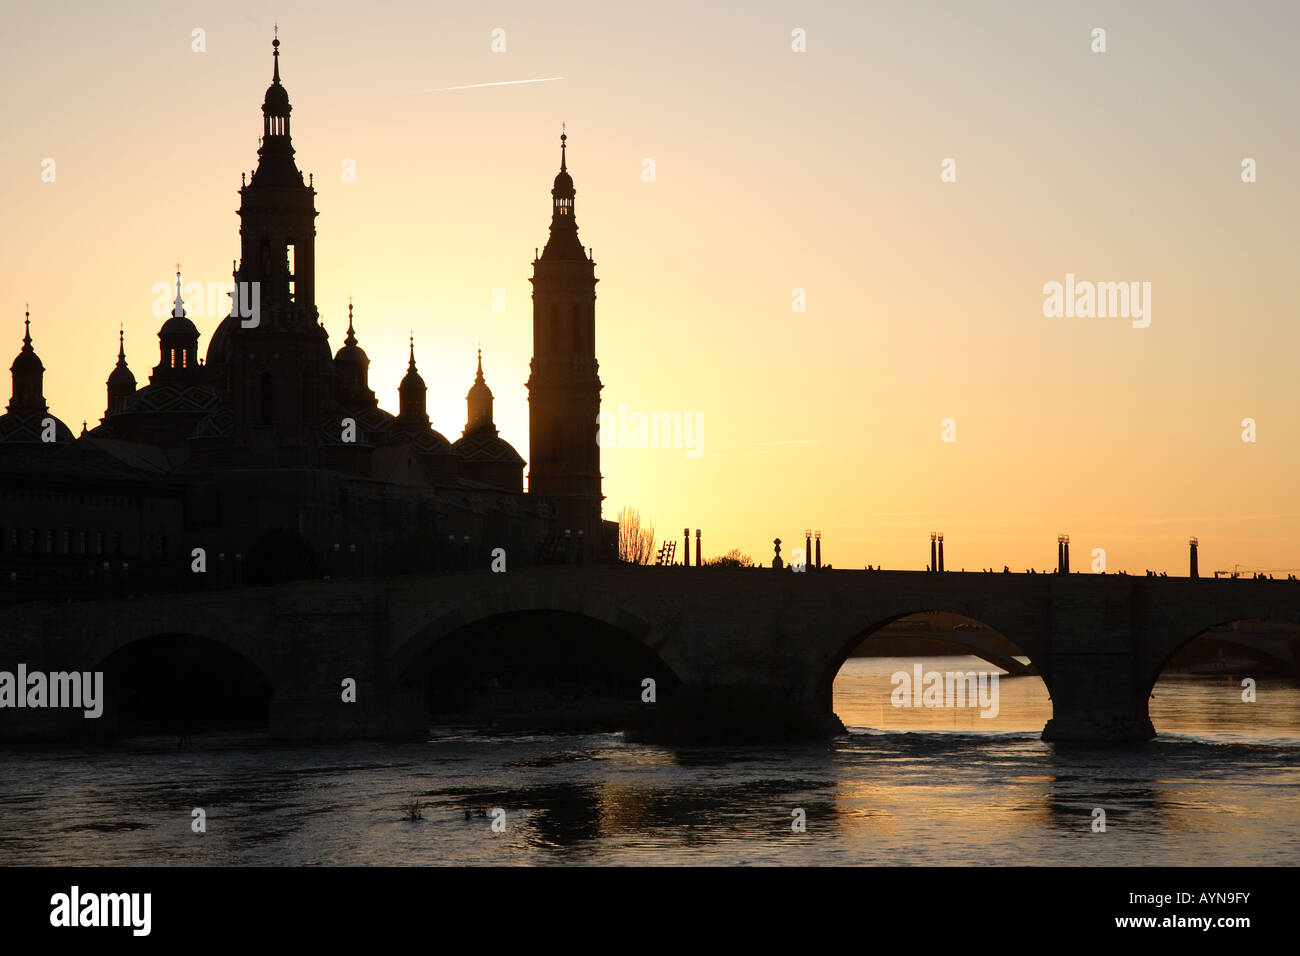 View of Basilica de Nuestra Senora del Pilar from a Bridge of the River Ebro, Zaragoza, Spain Stock Photo